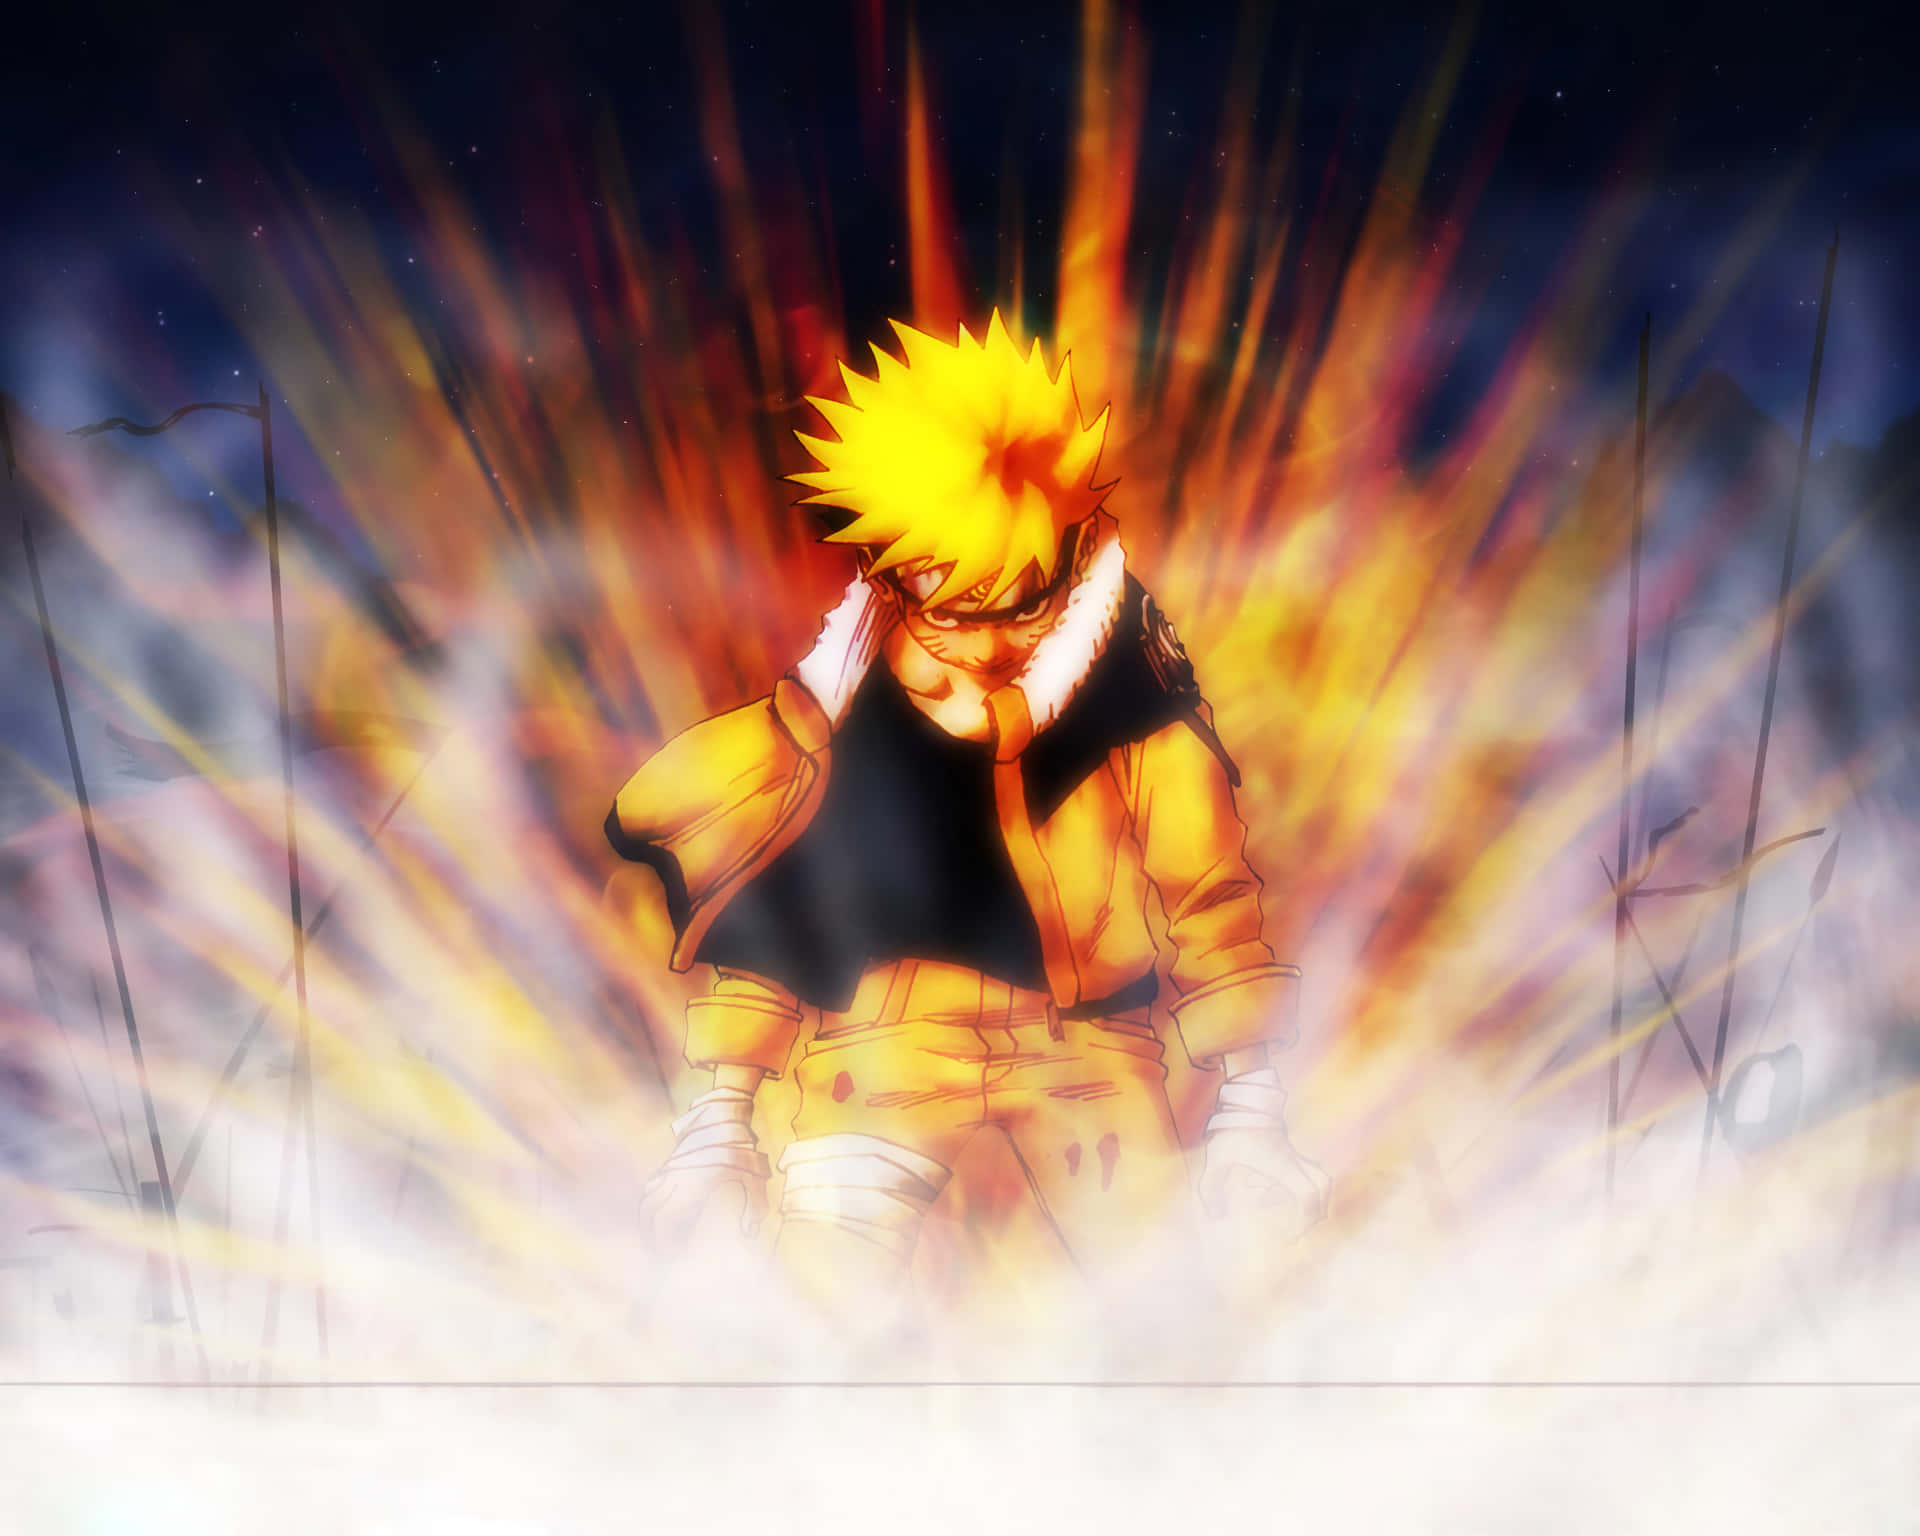 Epic Anime Scene Of Naruto Wallpaper